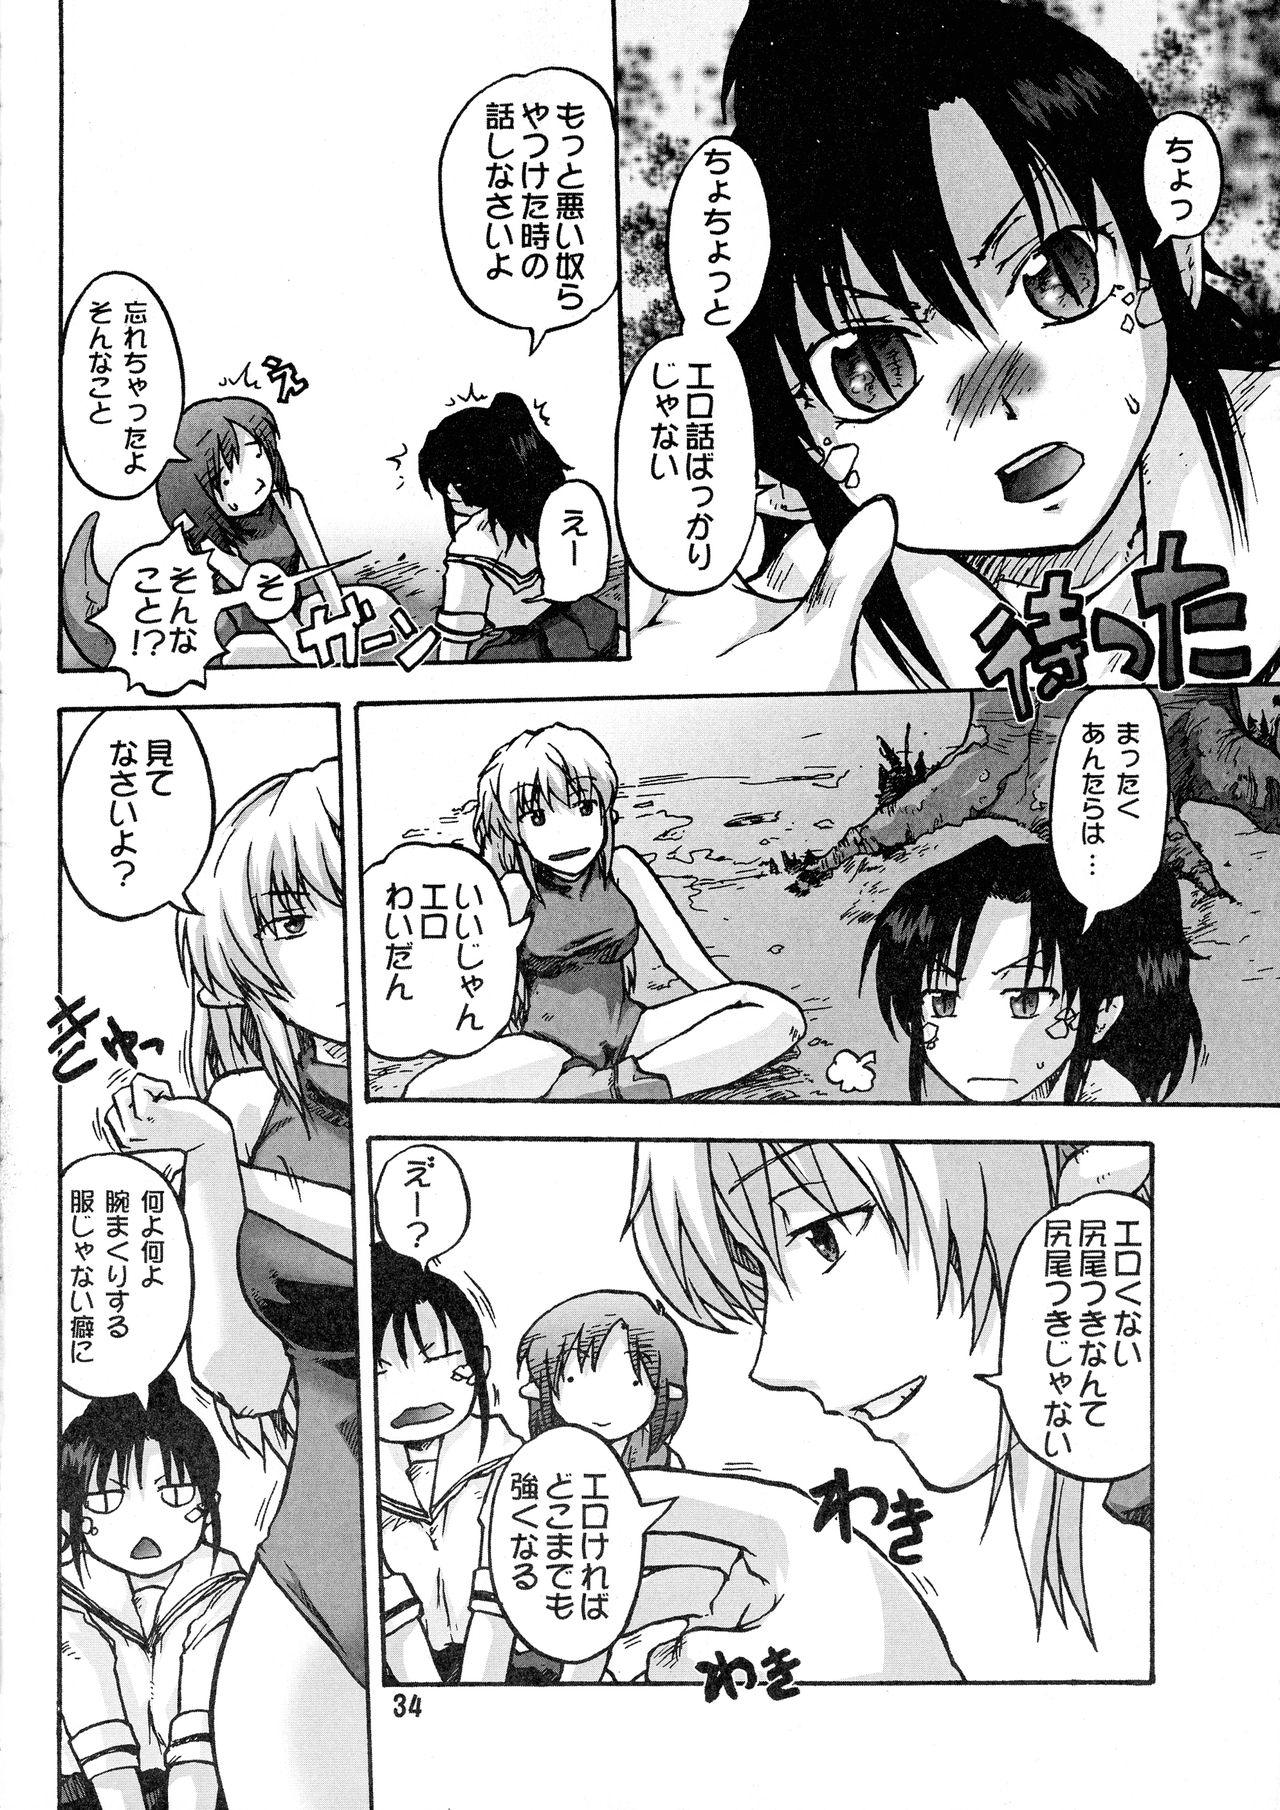 Manga Mintochikuwa vol. 3 34